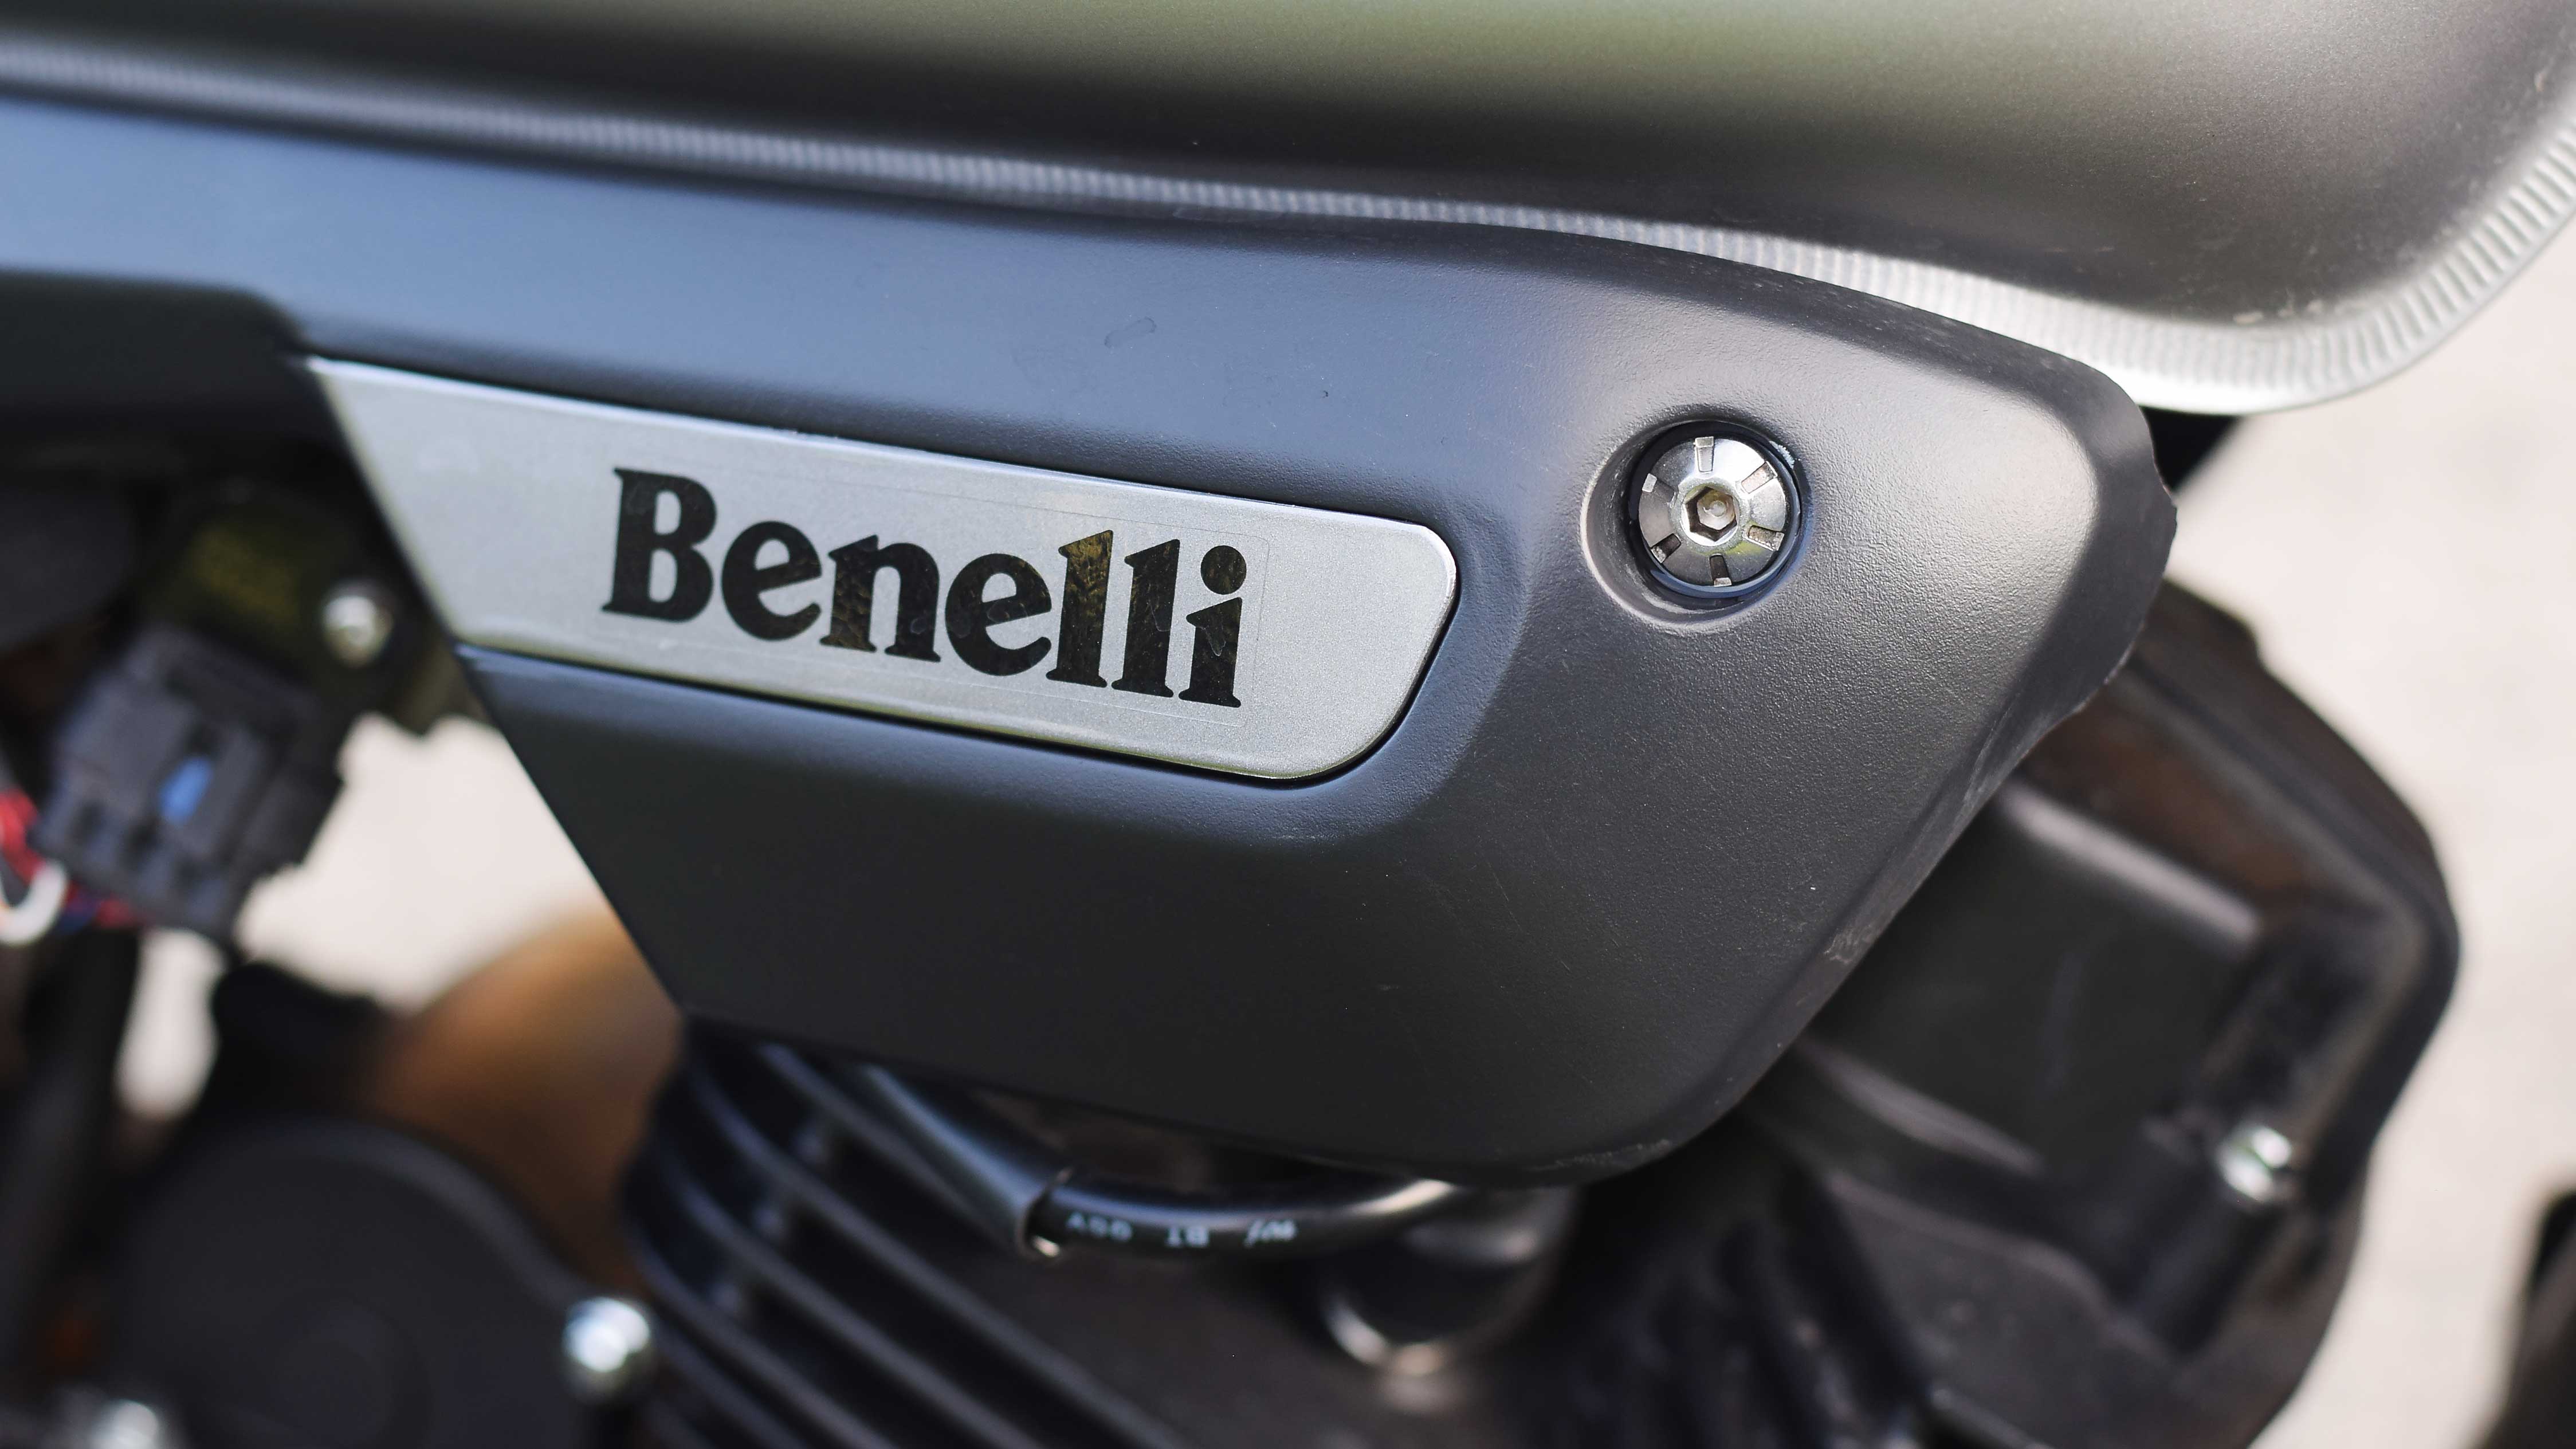 Benelli logo on the Motobi 200 Evo